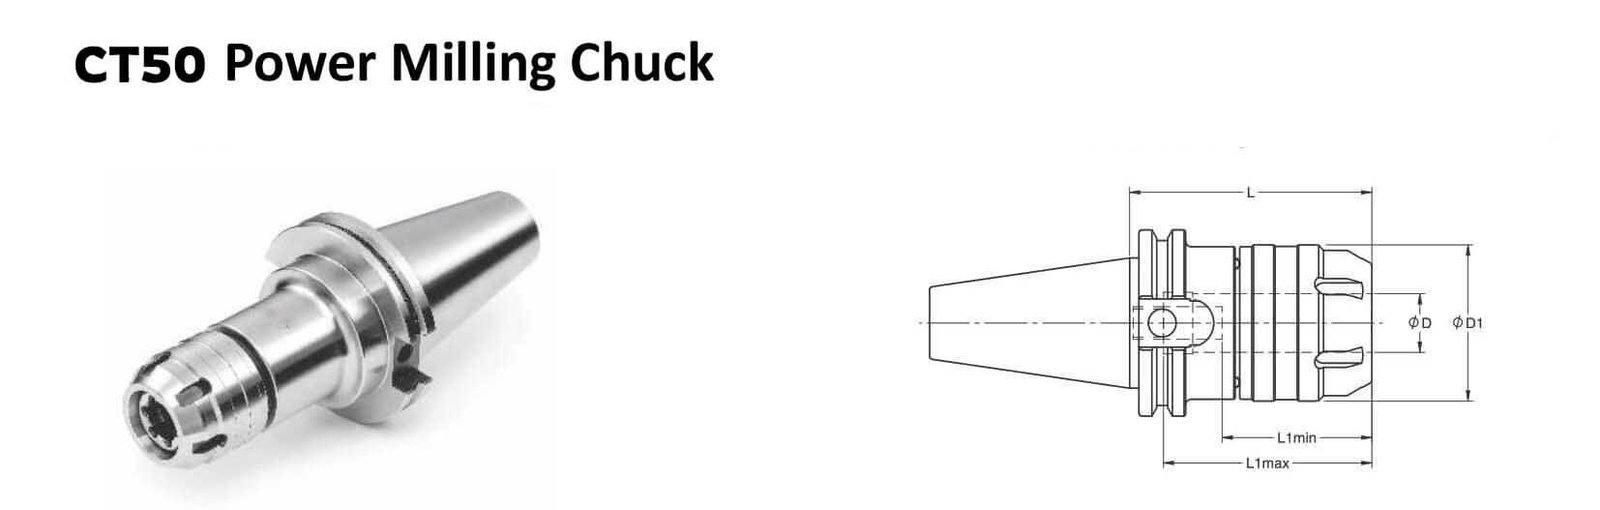 CT50 C 0.750 - 3.25 Power Milling Chuck (Balanced to 2.5G 25000 rpm)